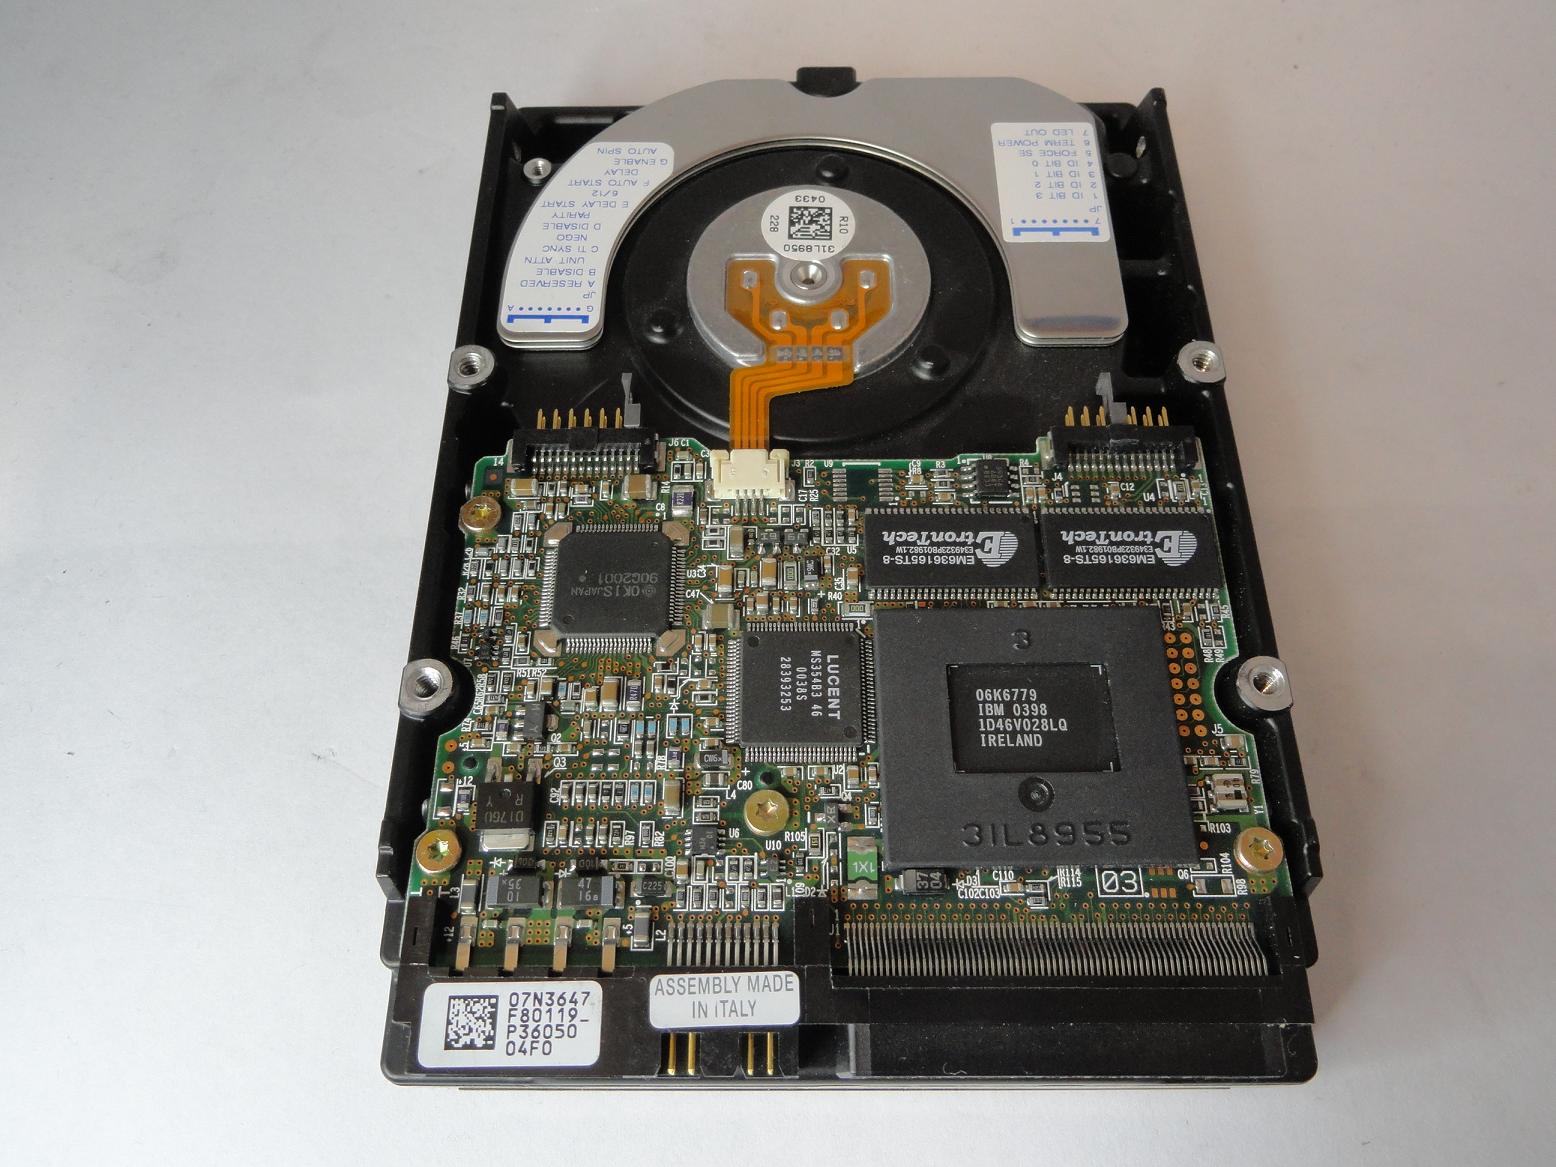 MC0099_07N3220_IBM 9Gb SCSI 68 Pin 10Krpm 3.5in HDD - Image3